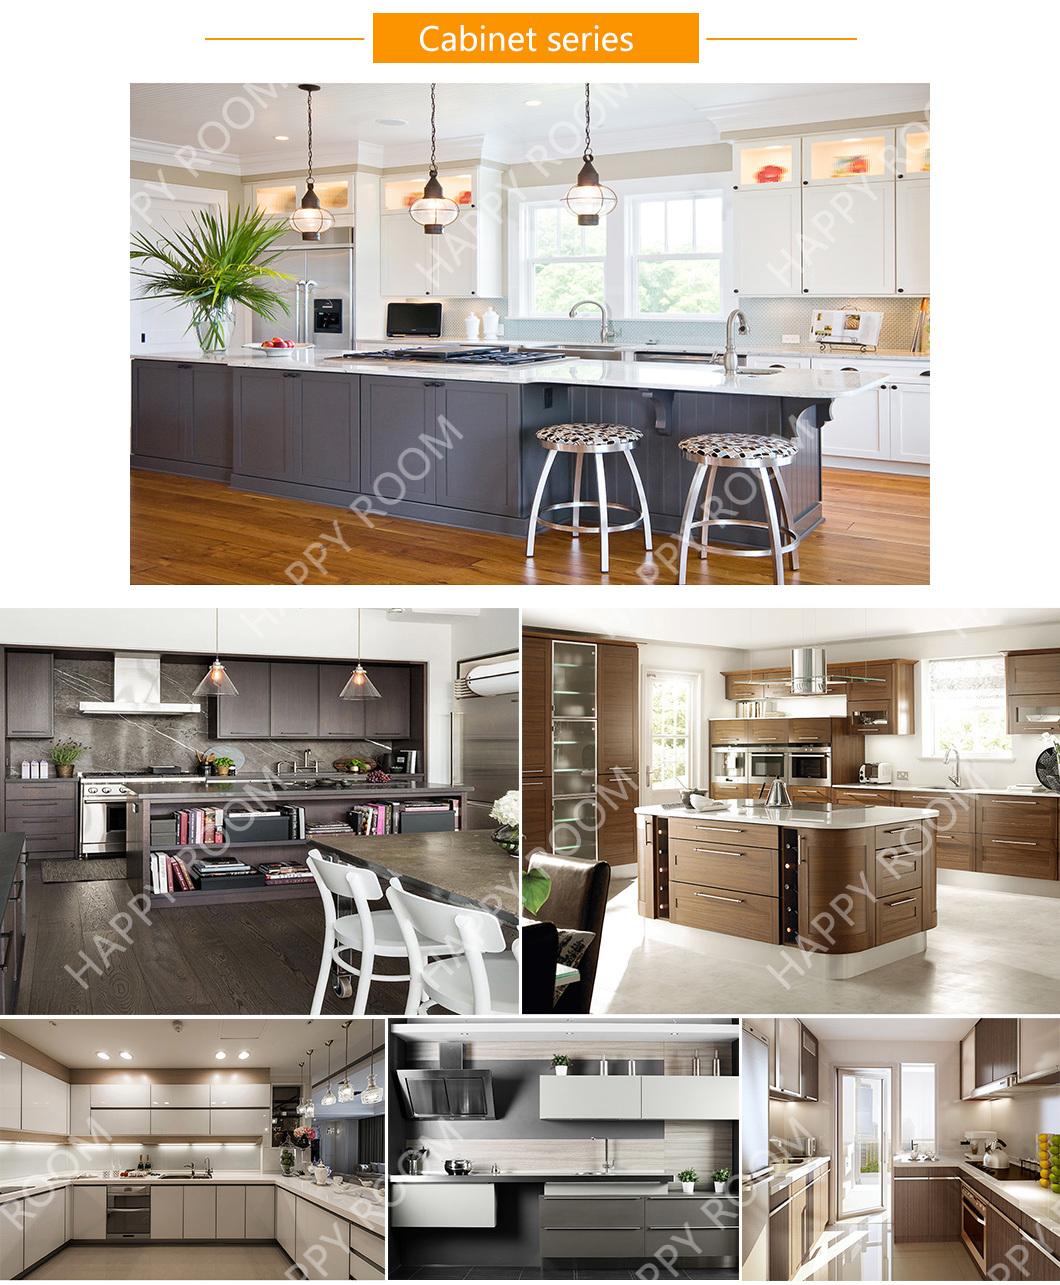 2021 Happyroom Aluminium/Aluminum Furniture Modern Cabinet Classic Cabinet Kitchen Cabinet